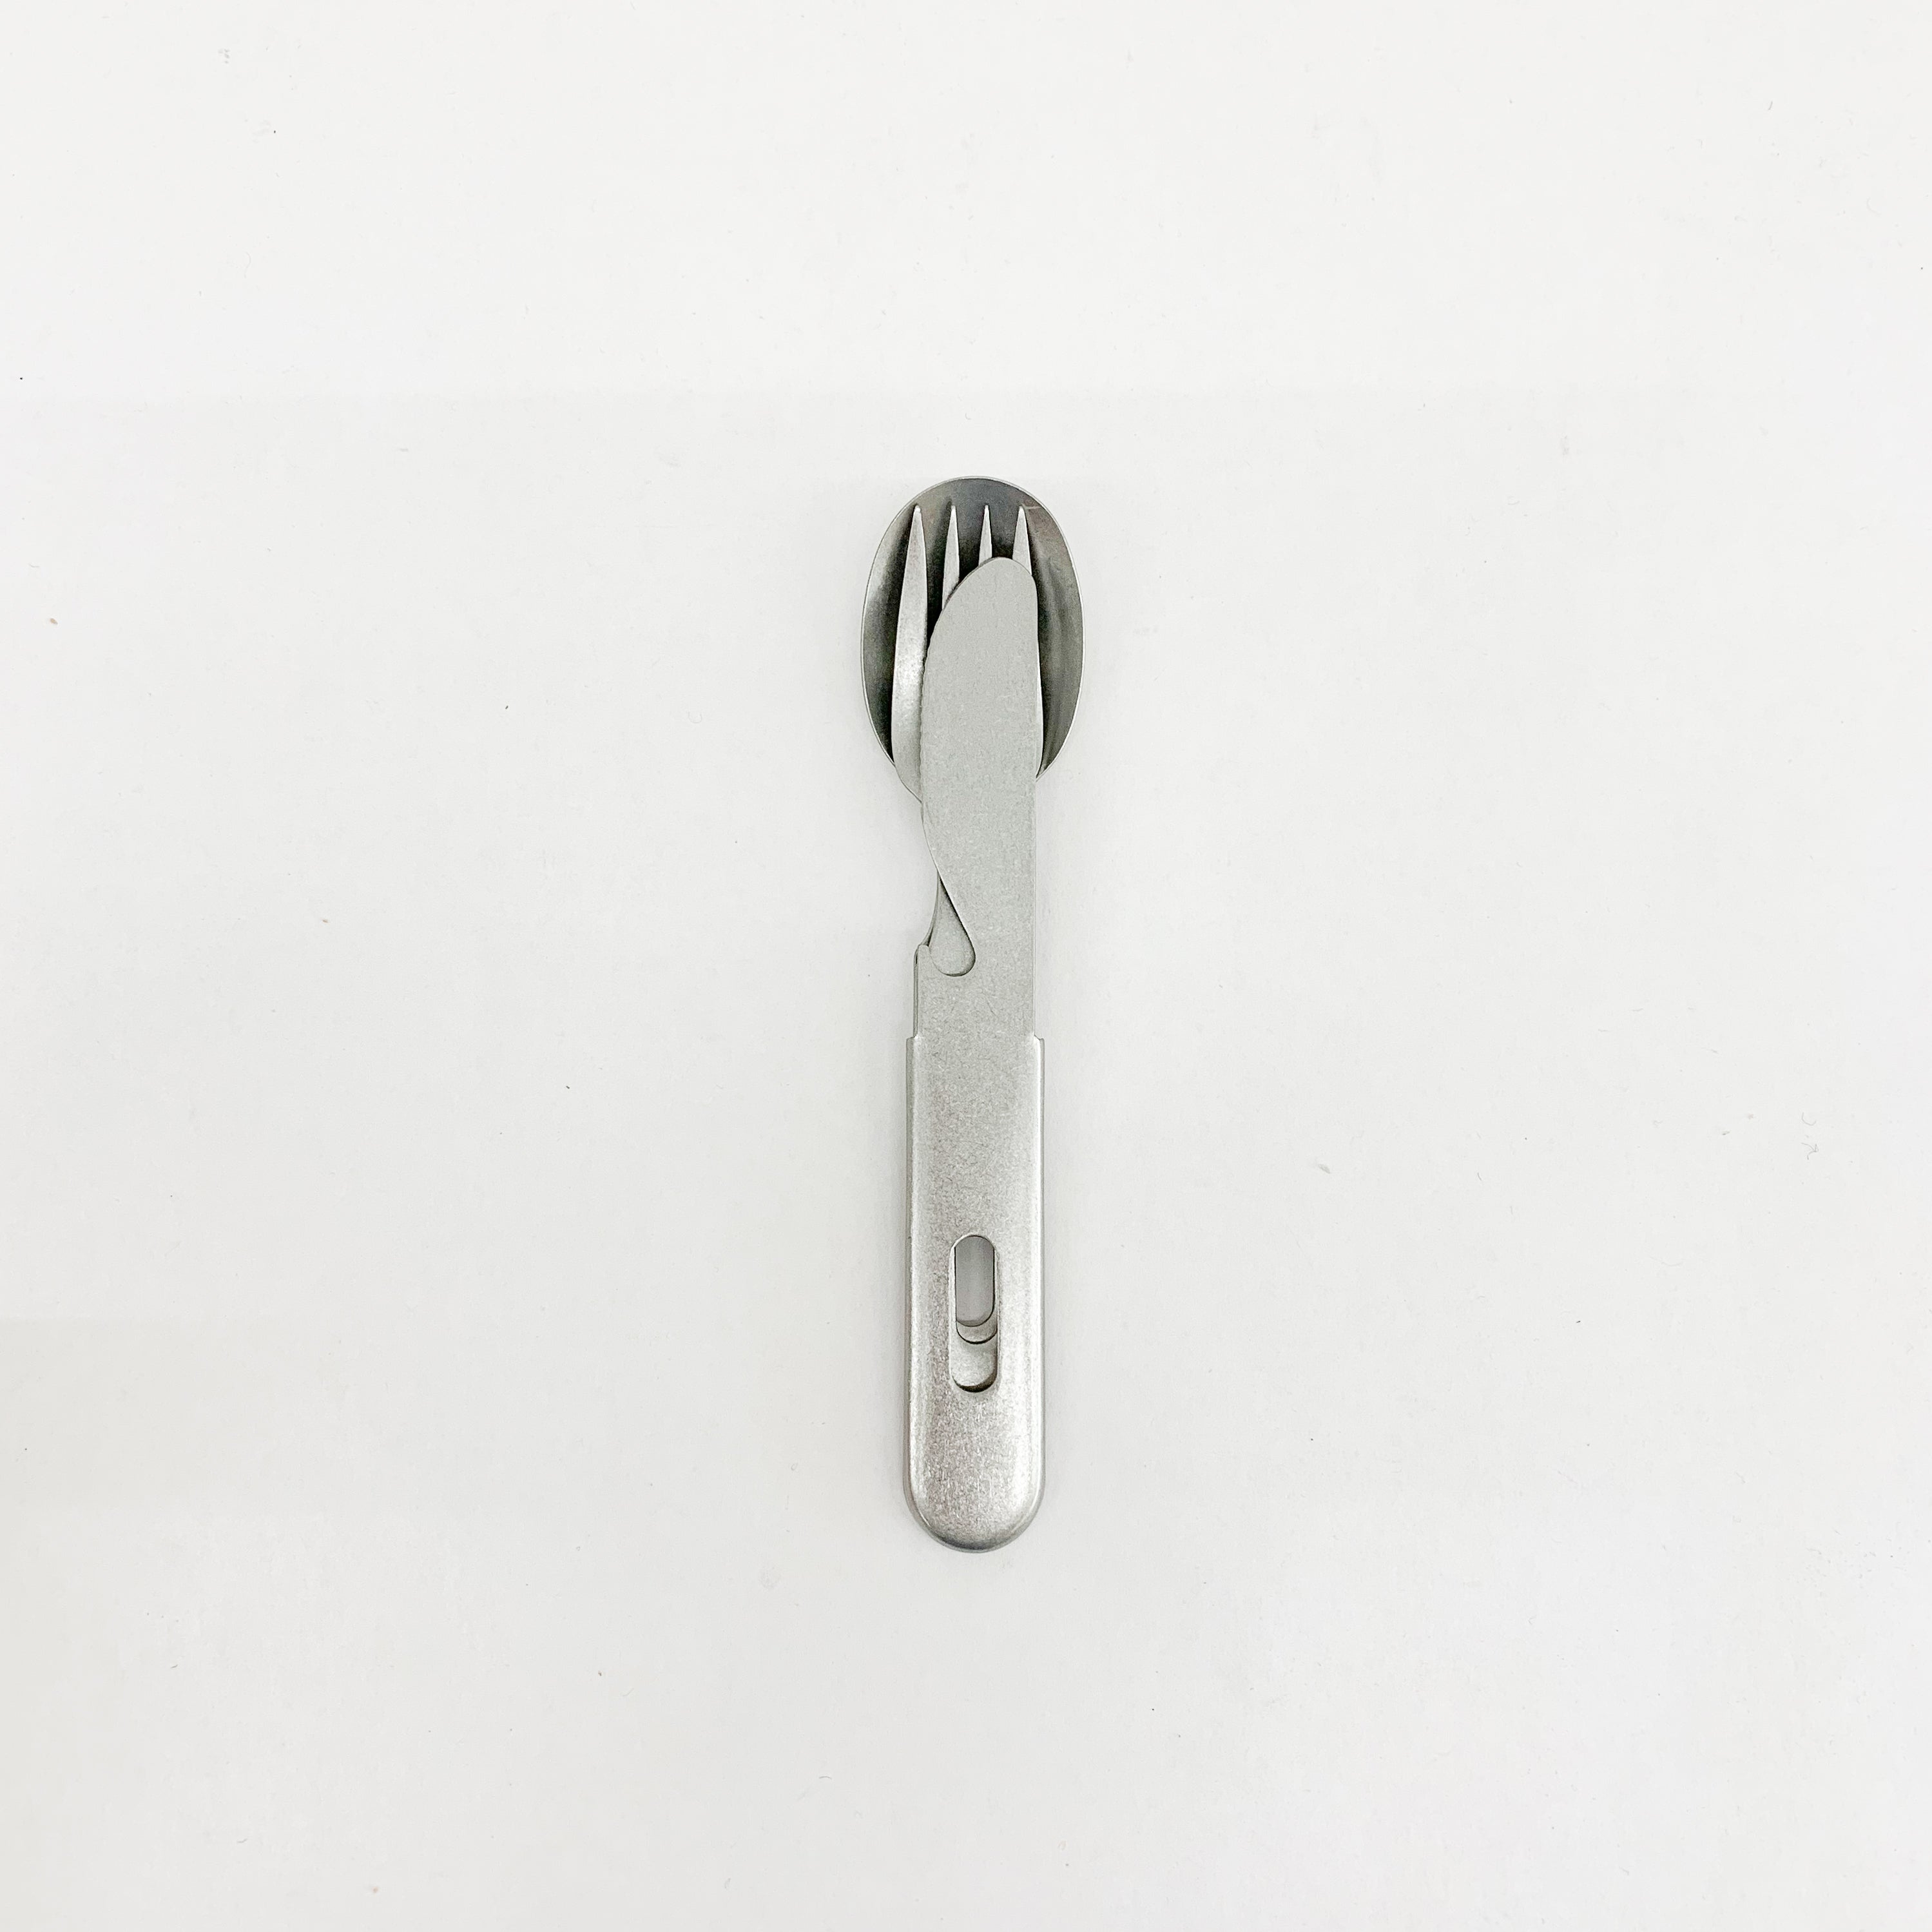 Stainless Steel Cutlery Set by Tsubamesanjo - tortoise general store